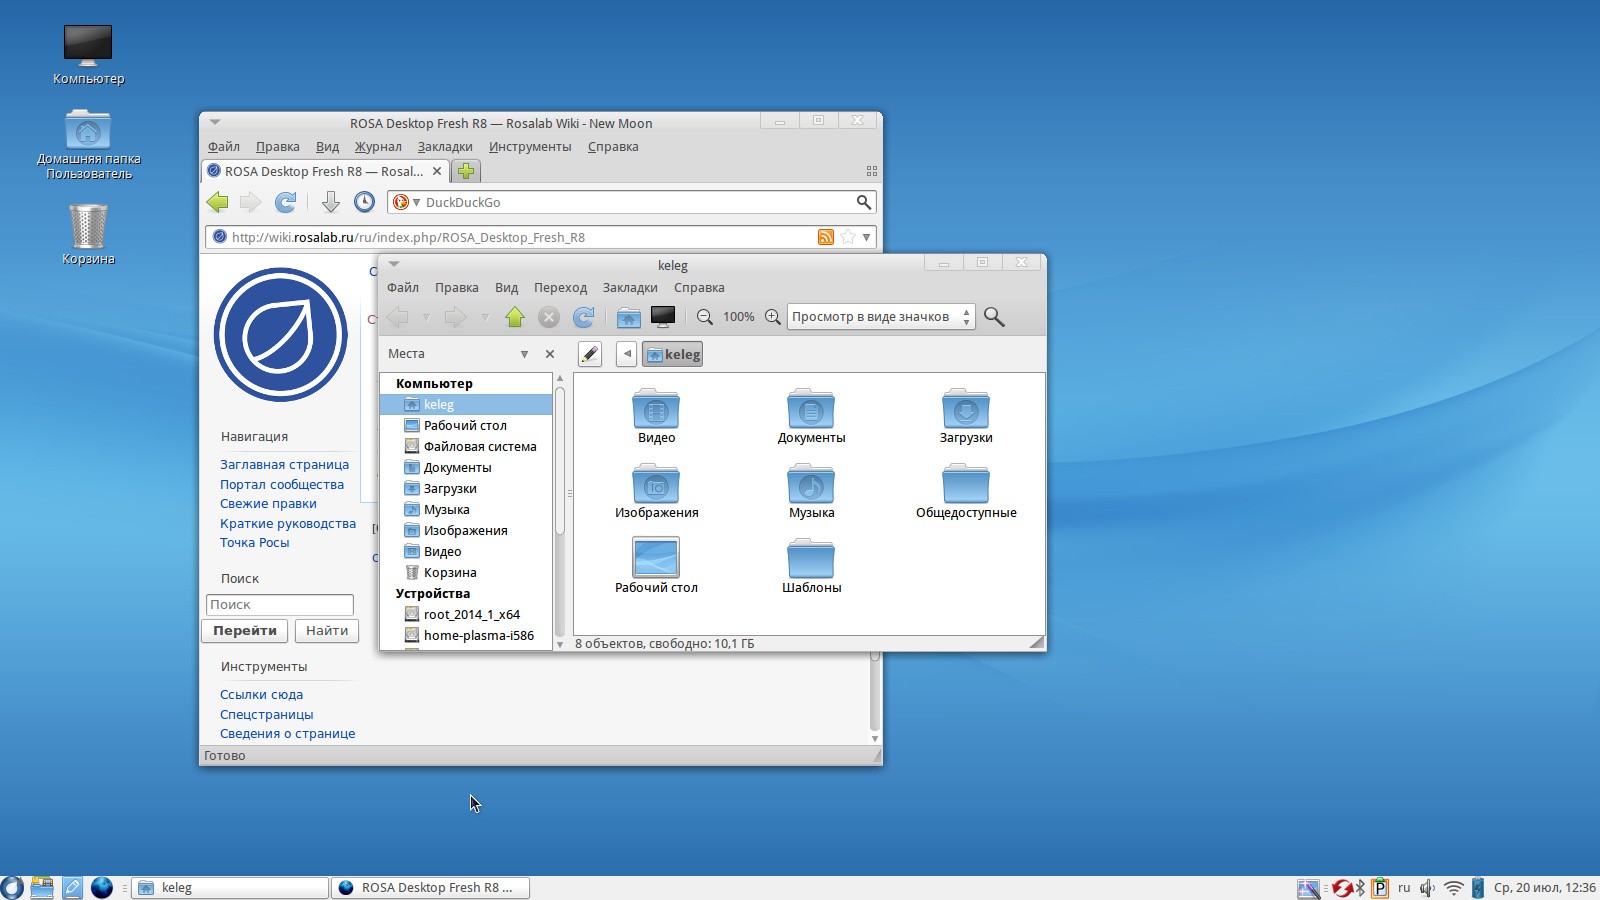 ROSA Desktop Fresh R8 Linux Ships with KDE 4, Plasma 5, GNOME and